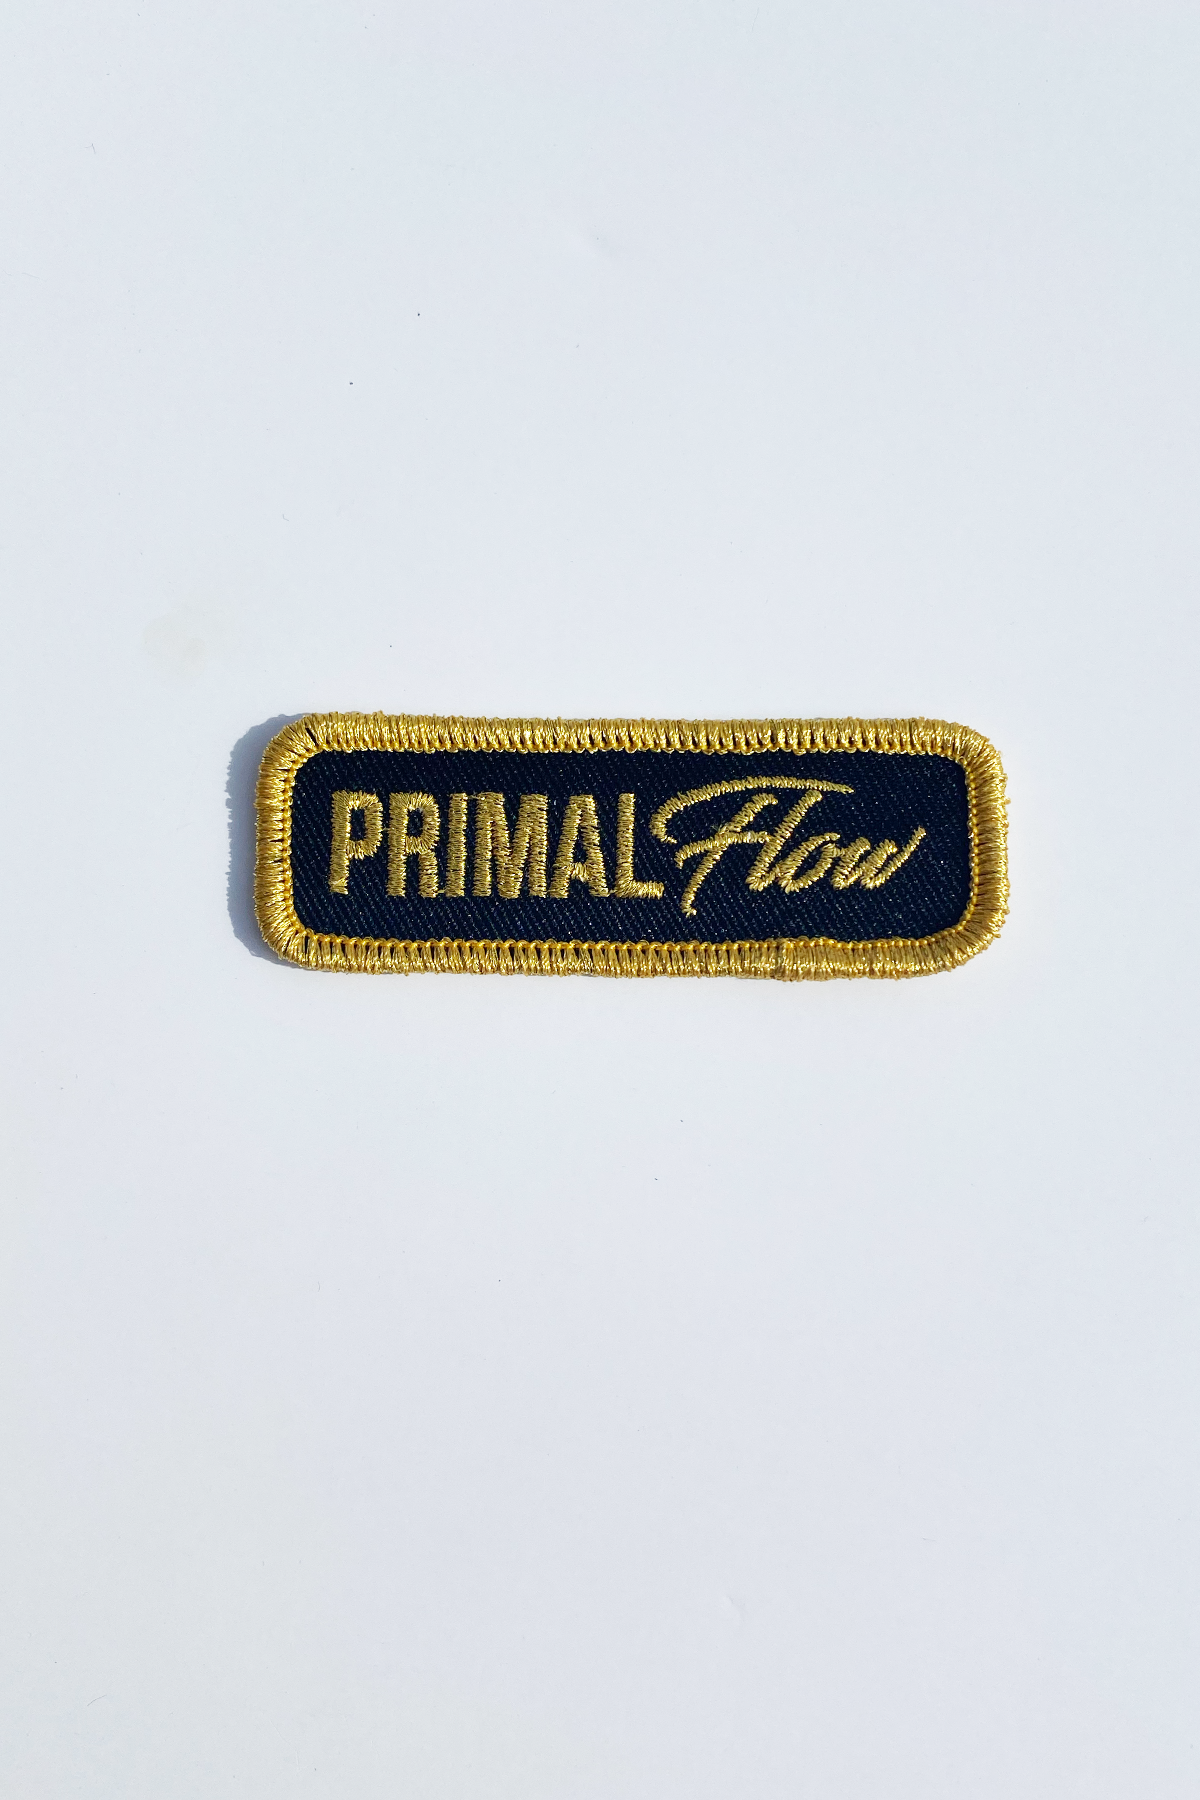 Primal Flow Patch